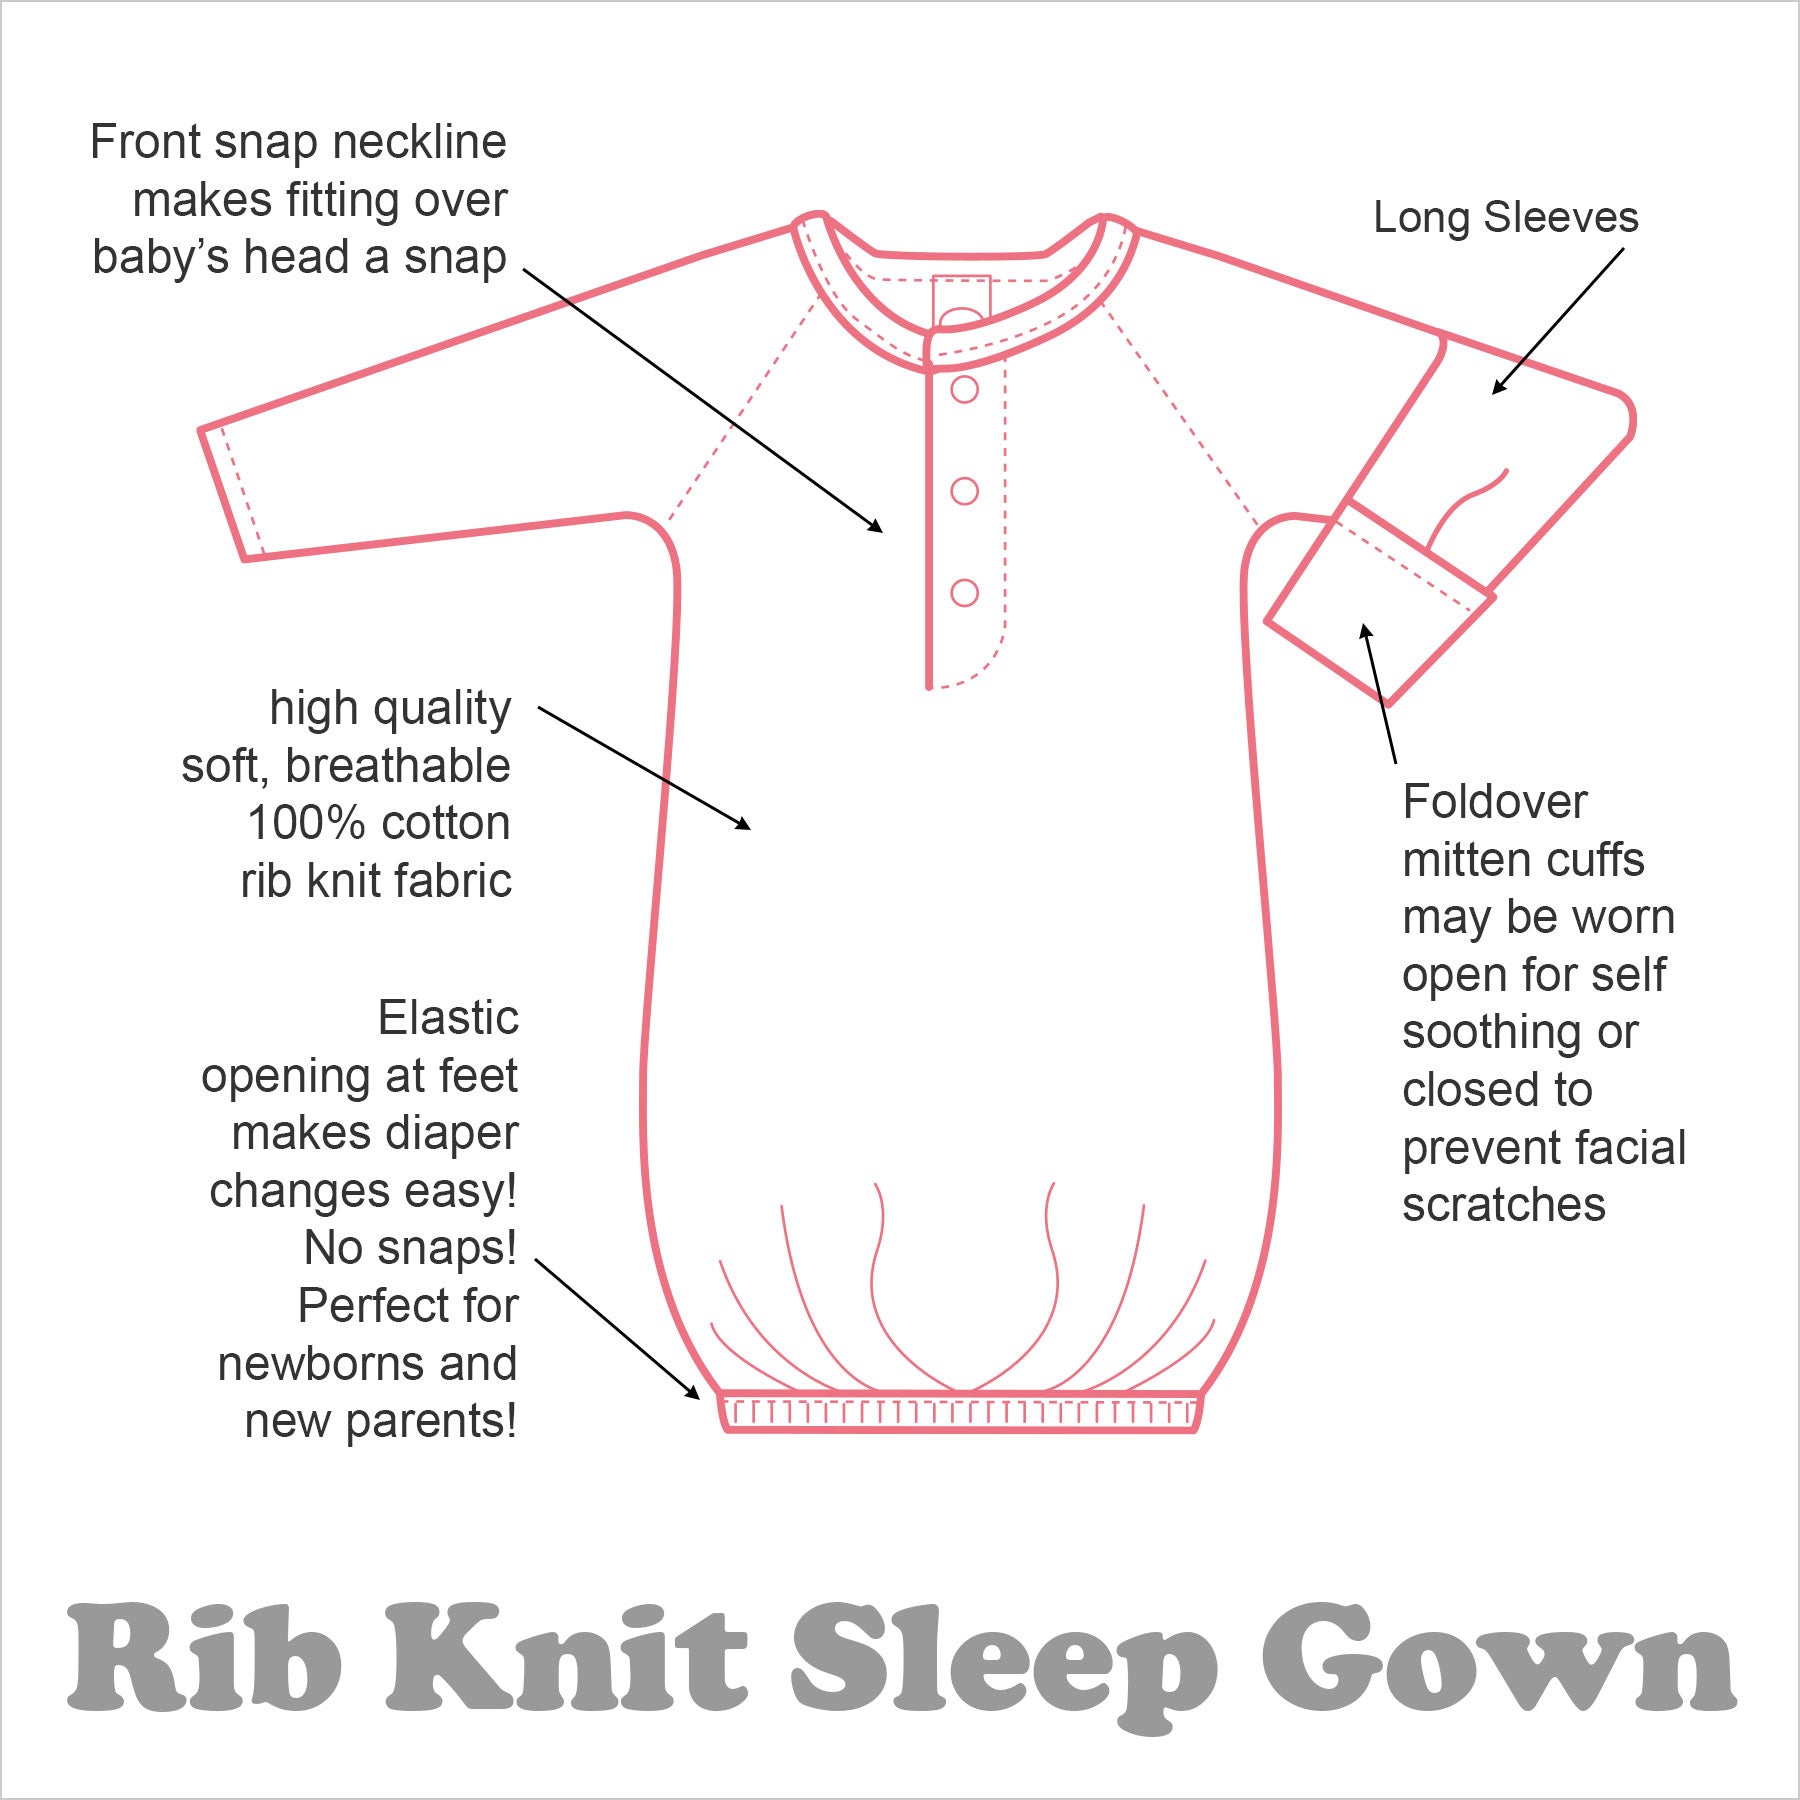 Rib Knit Sleep Gown Diagram